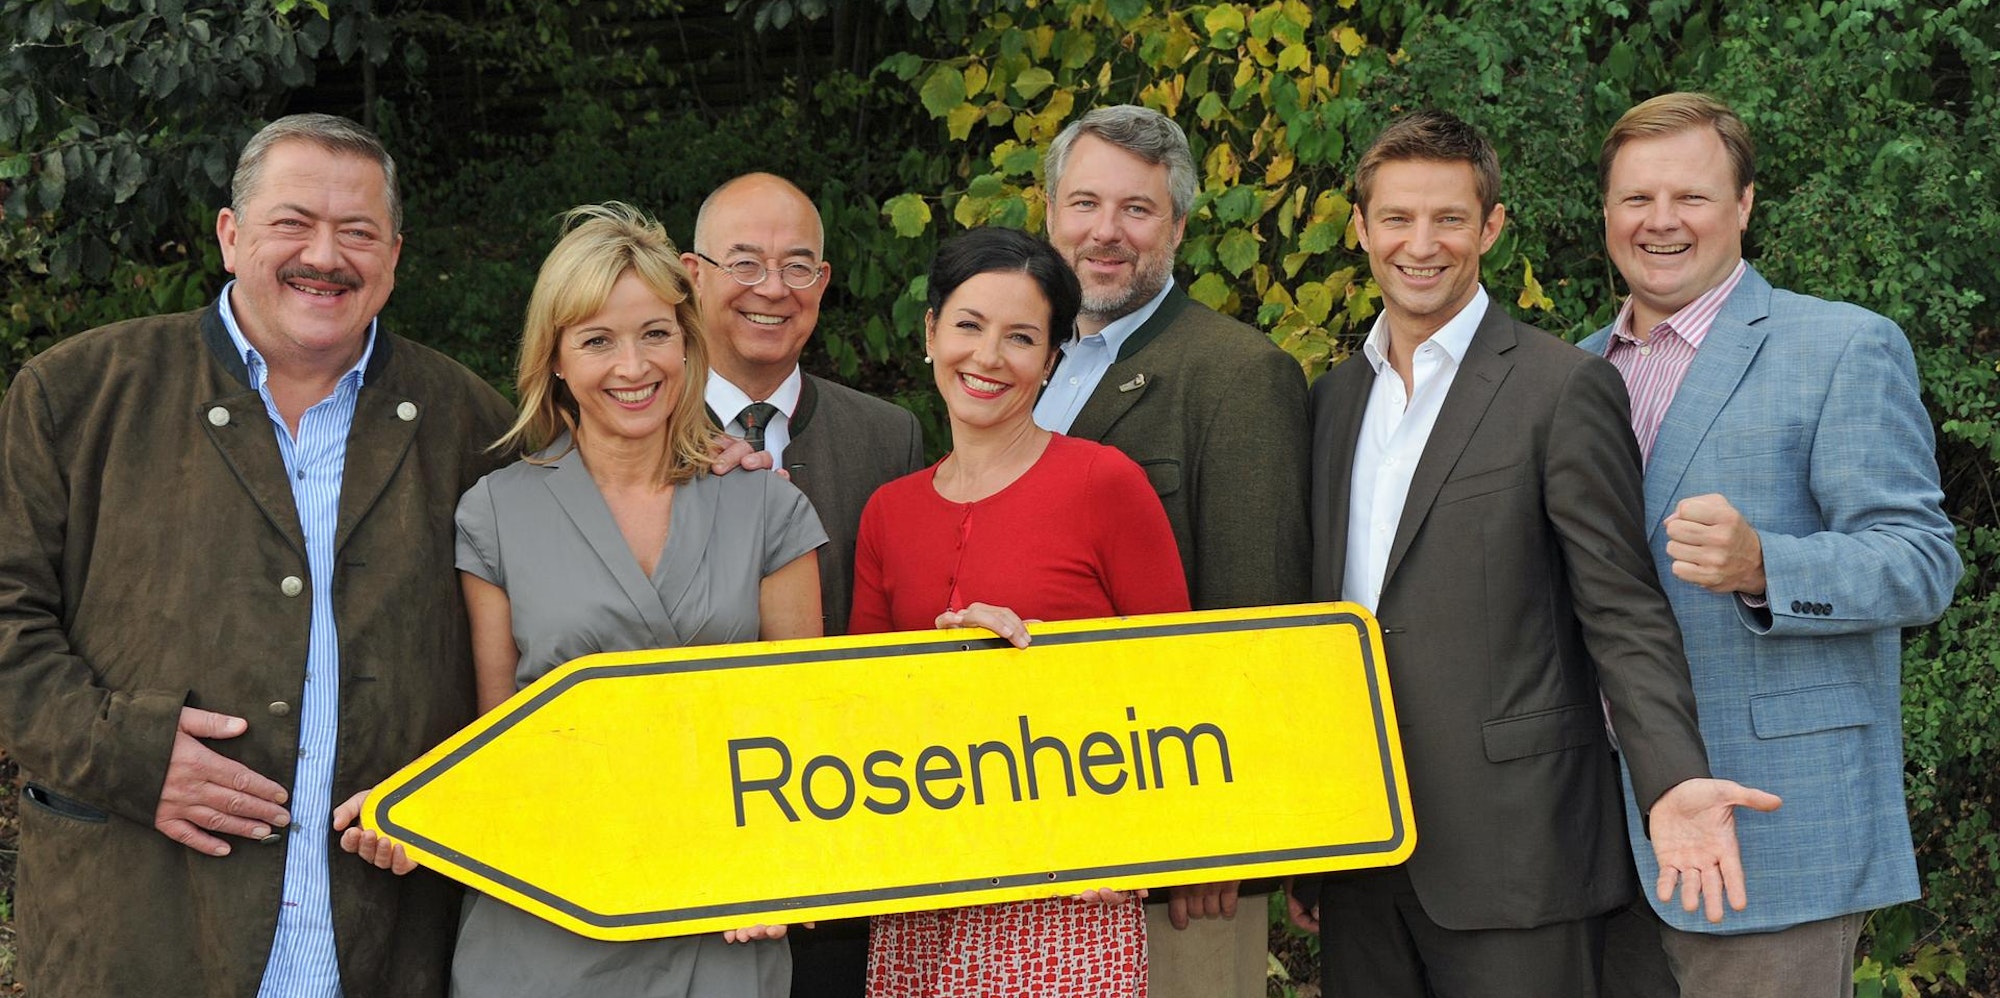 Rosenheim_Cops109755106